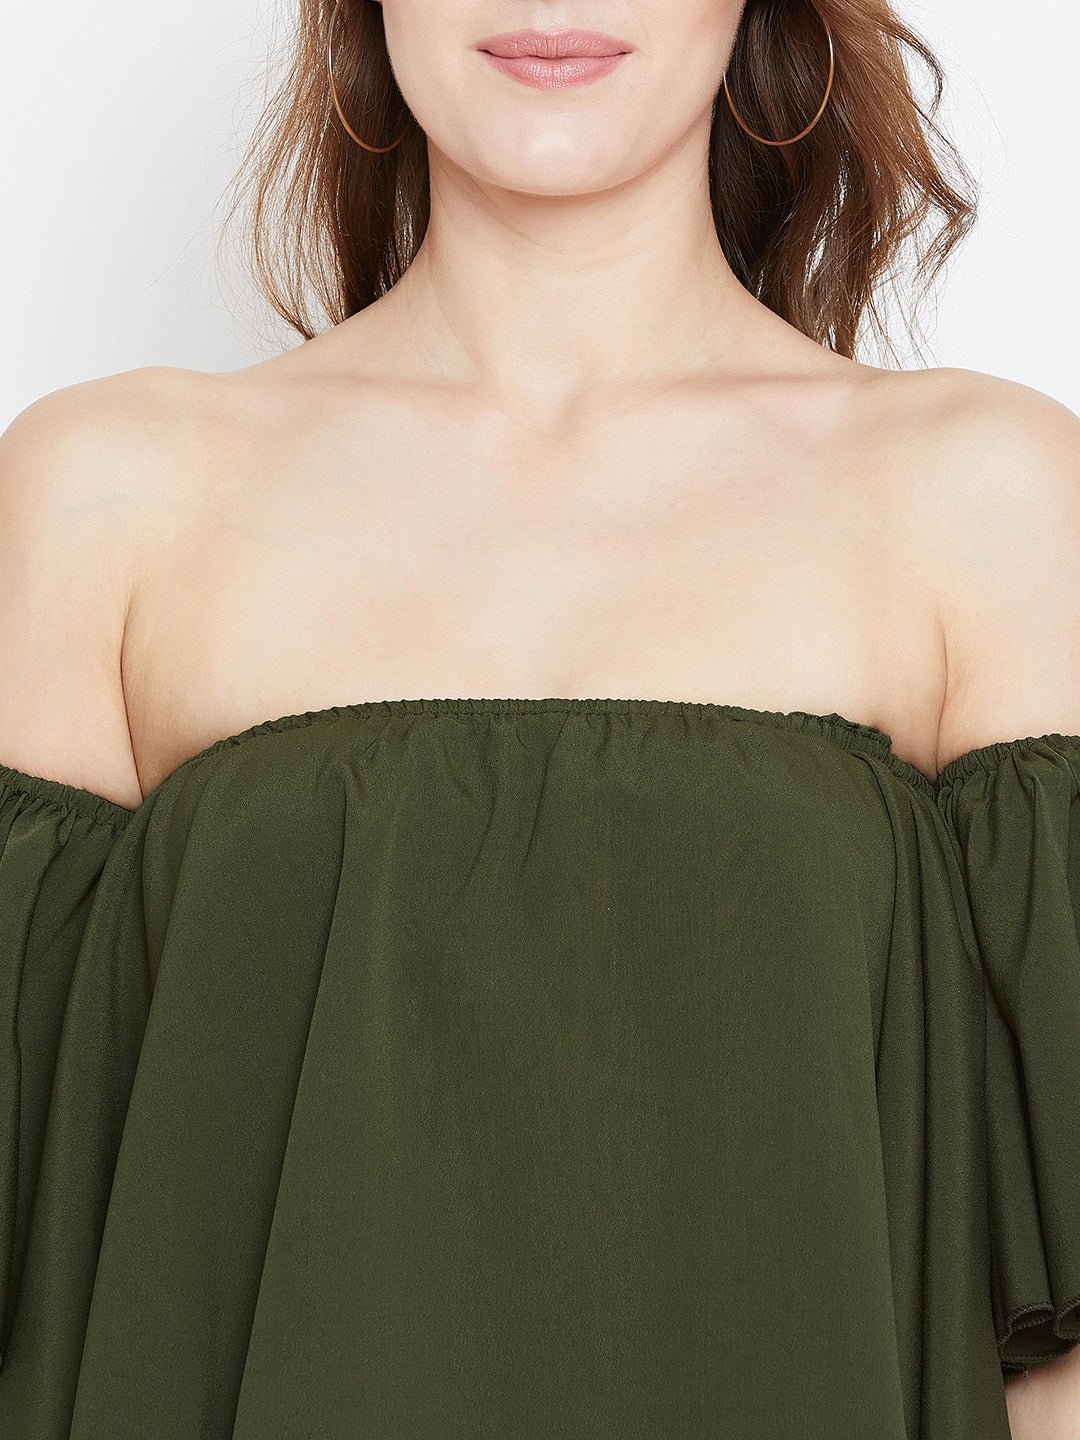 Folk Republic Women Solid Olive Green Off-Shoulder Neck Ruffled Crop Bardot Top - #folk republic#